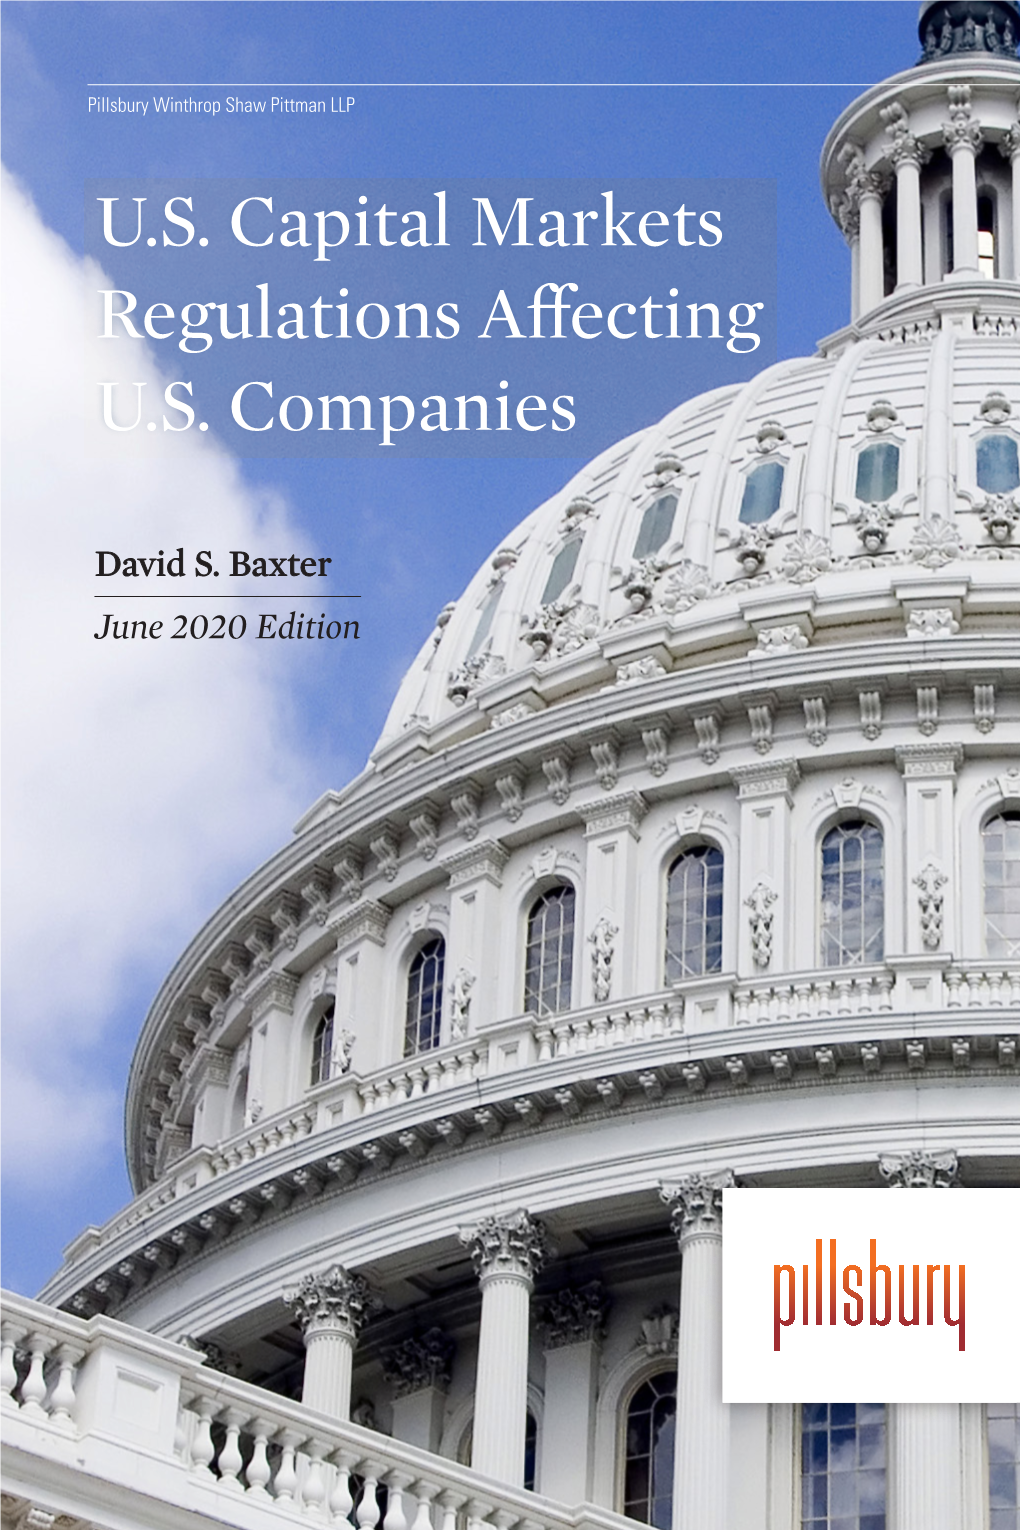 U.S. Capital Markets Regulations Affecting U.S. Companies